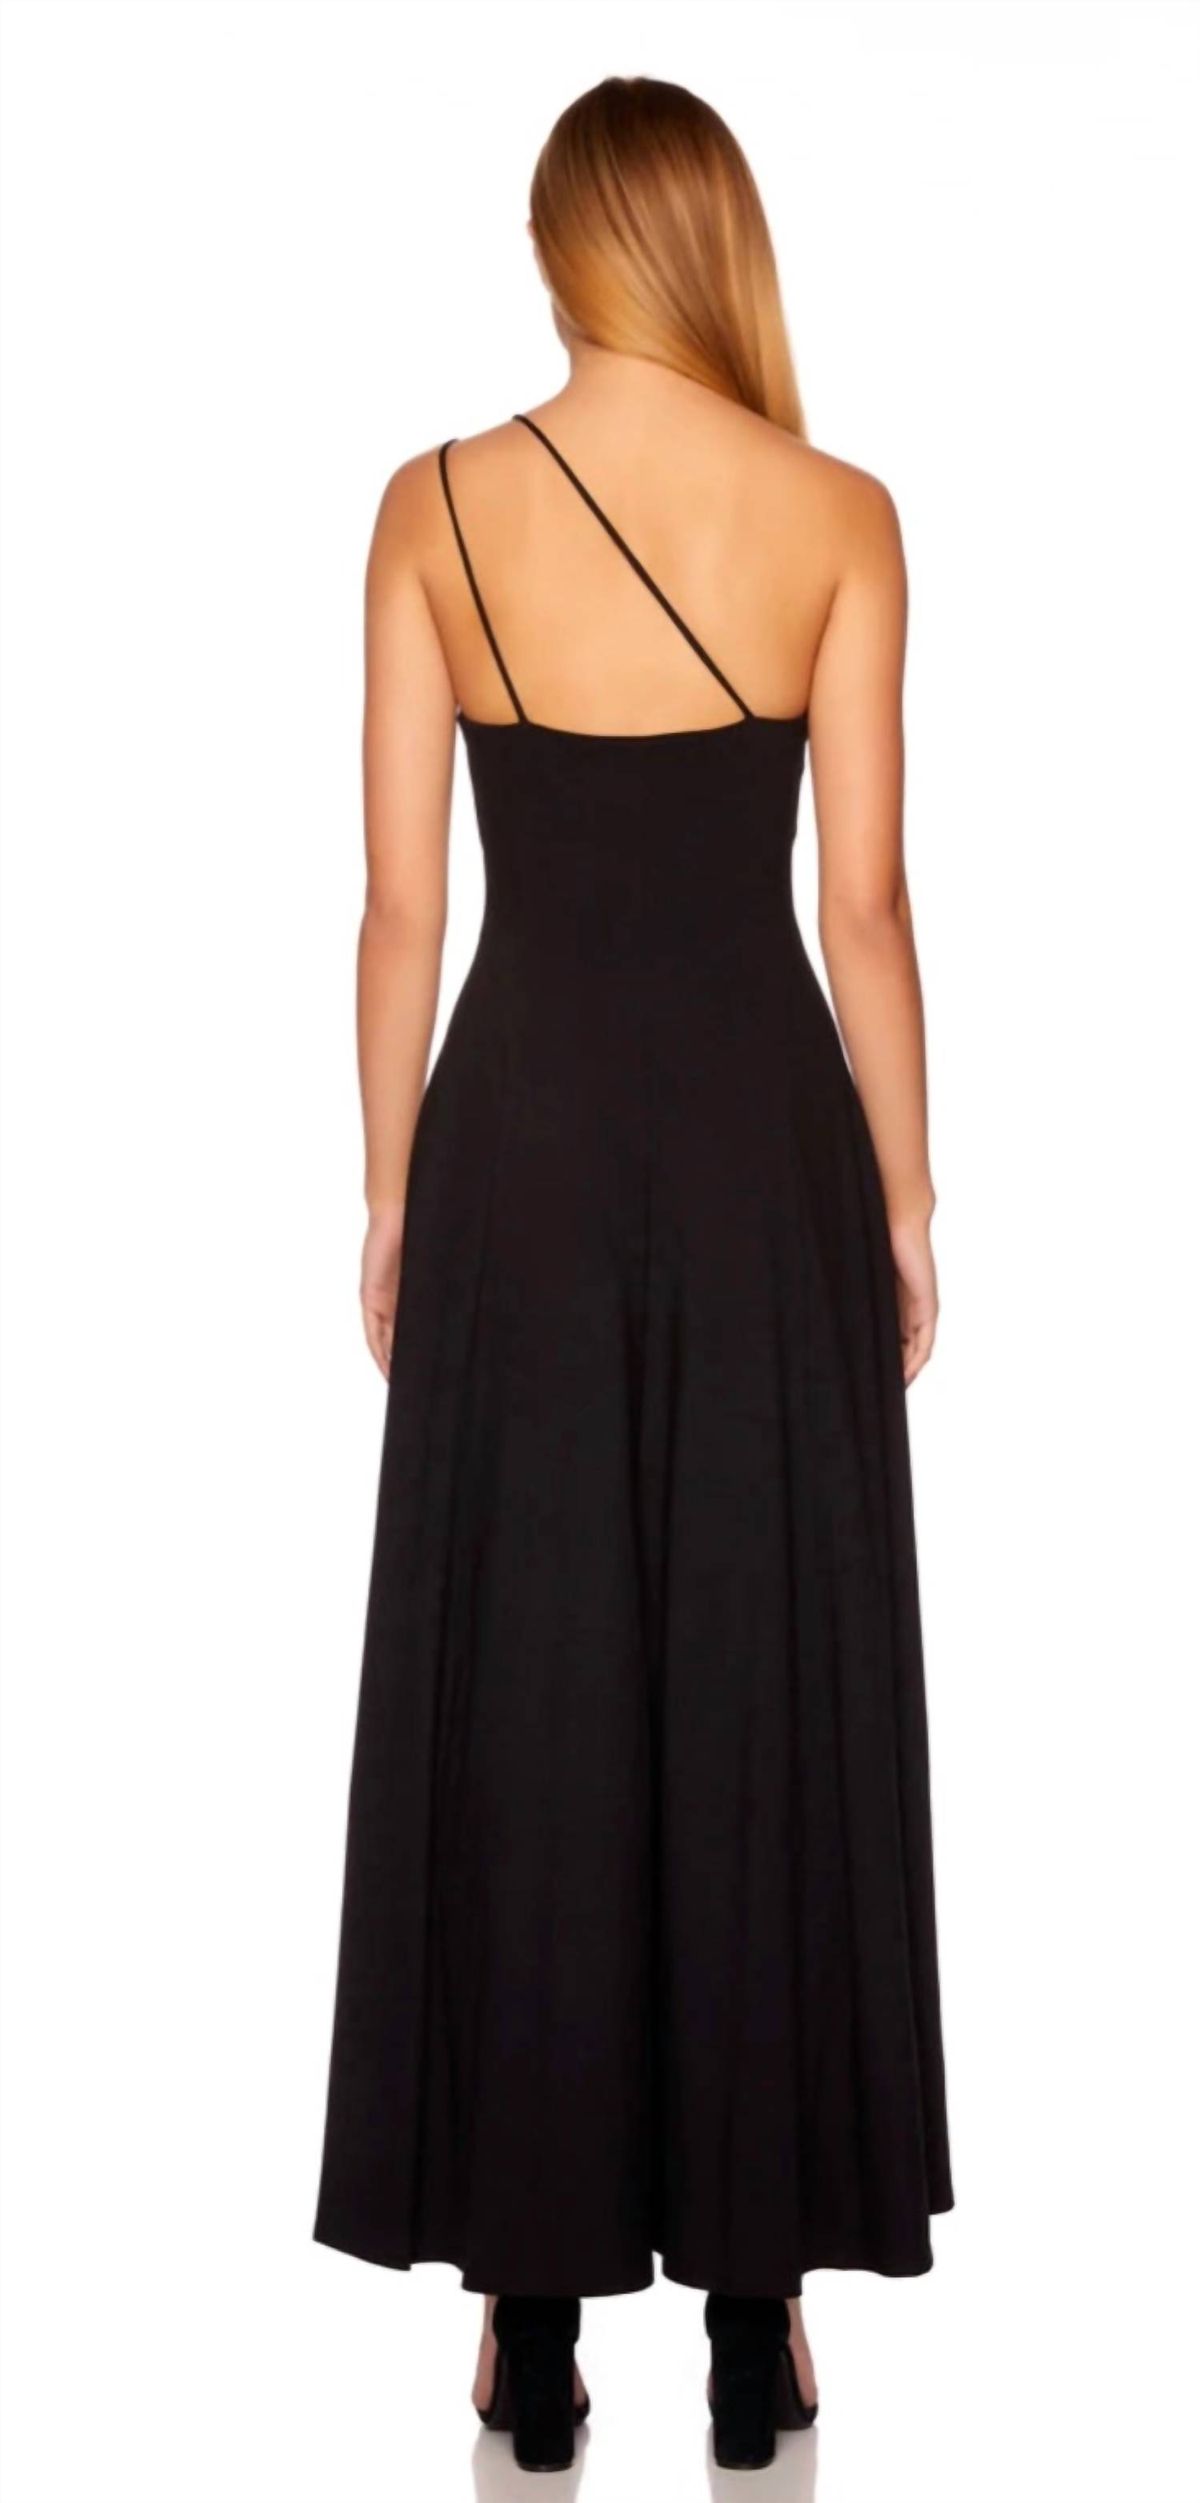 Style 1-2006195721-3855 Susana Monaco Size XS One Shoulder Black A-line Dress on Queenly